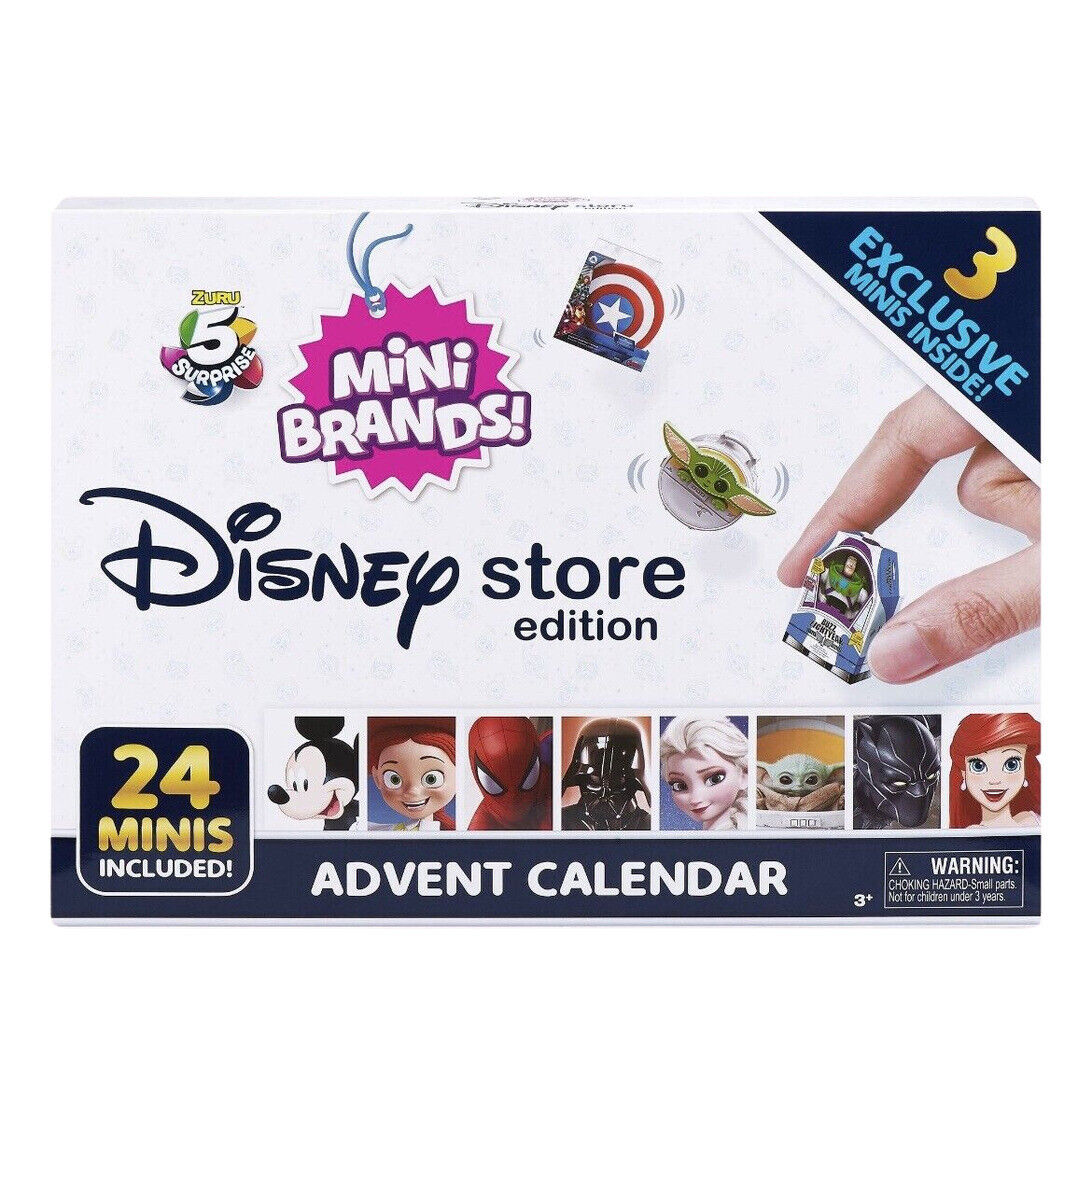 Disney Store Edition Mini Brands Advent Calendar for sale online